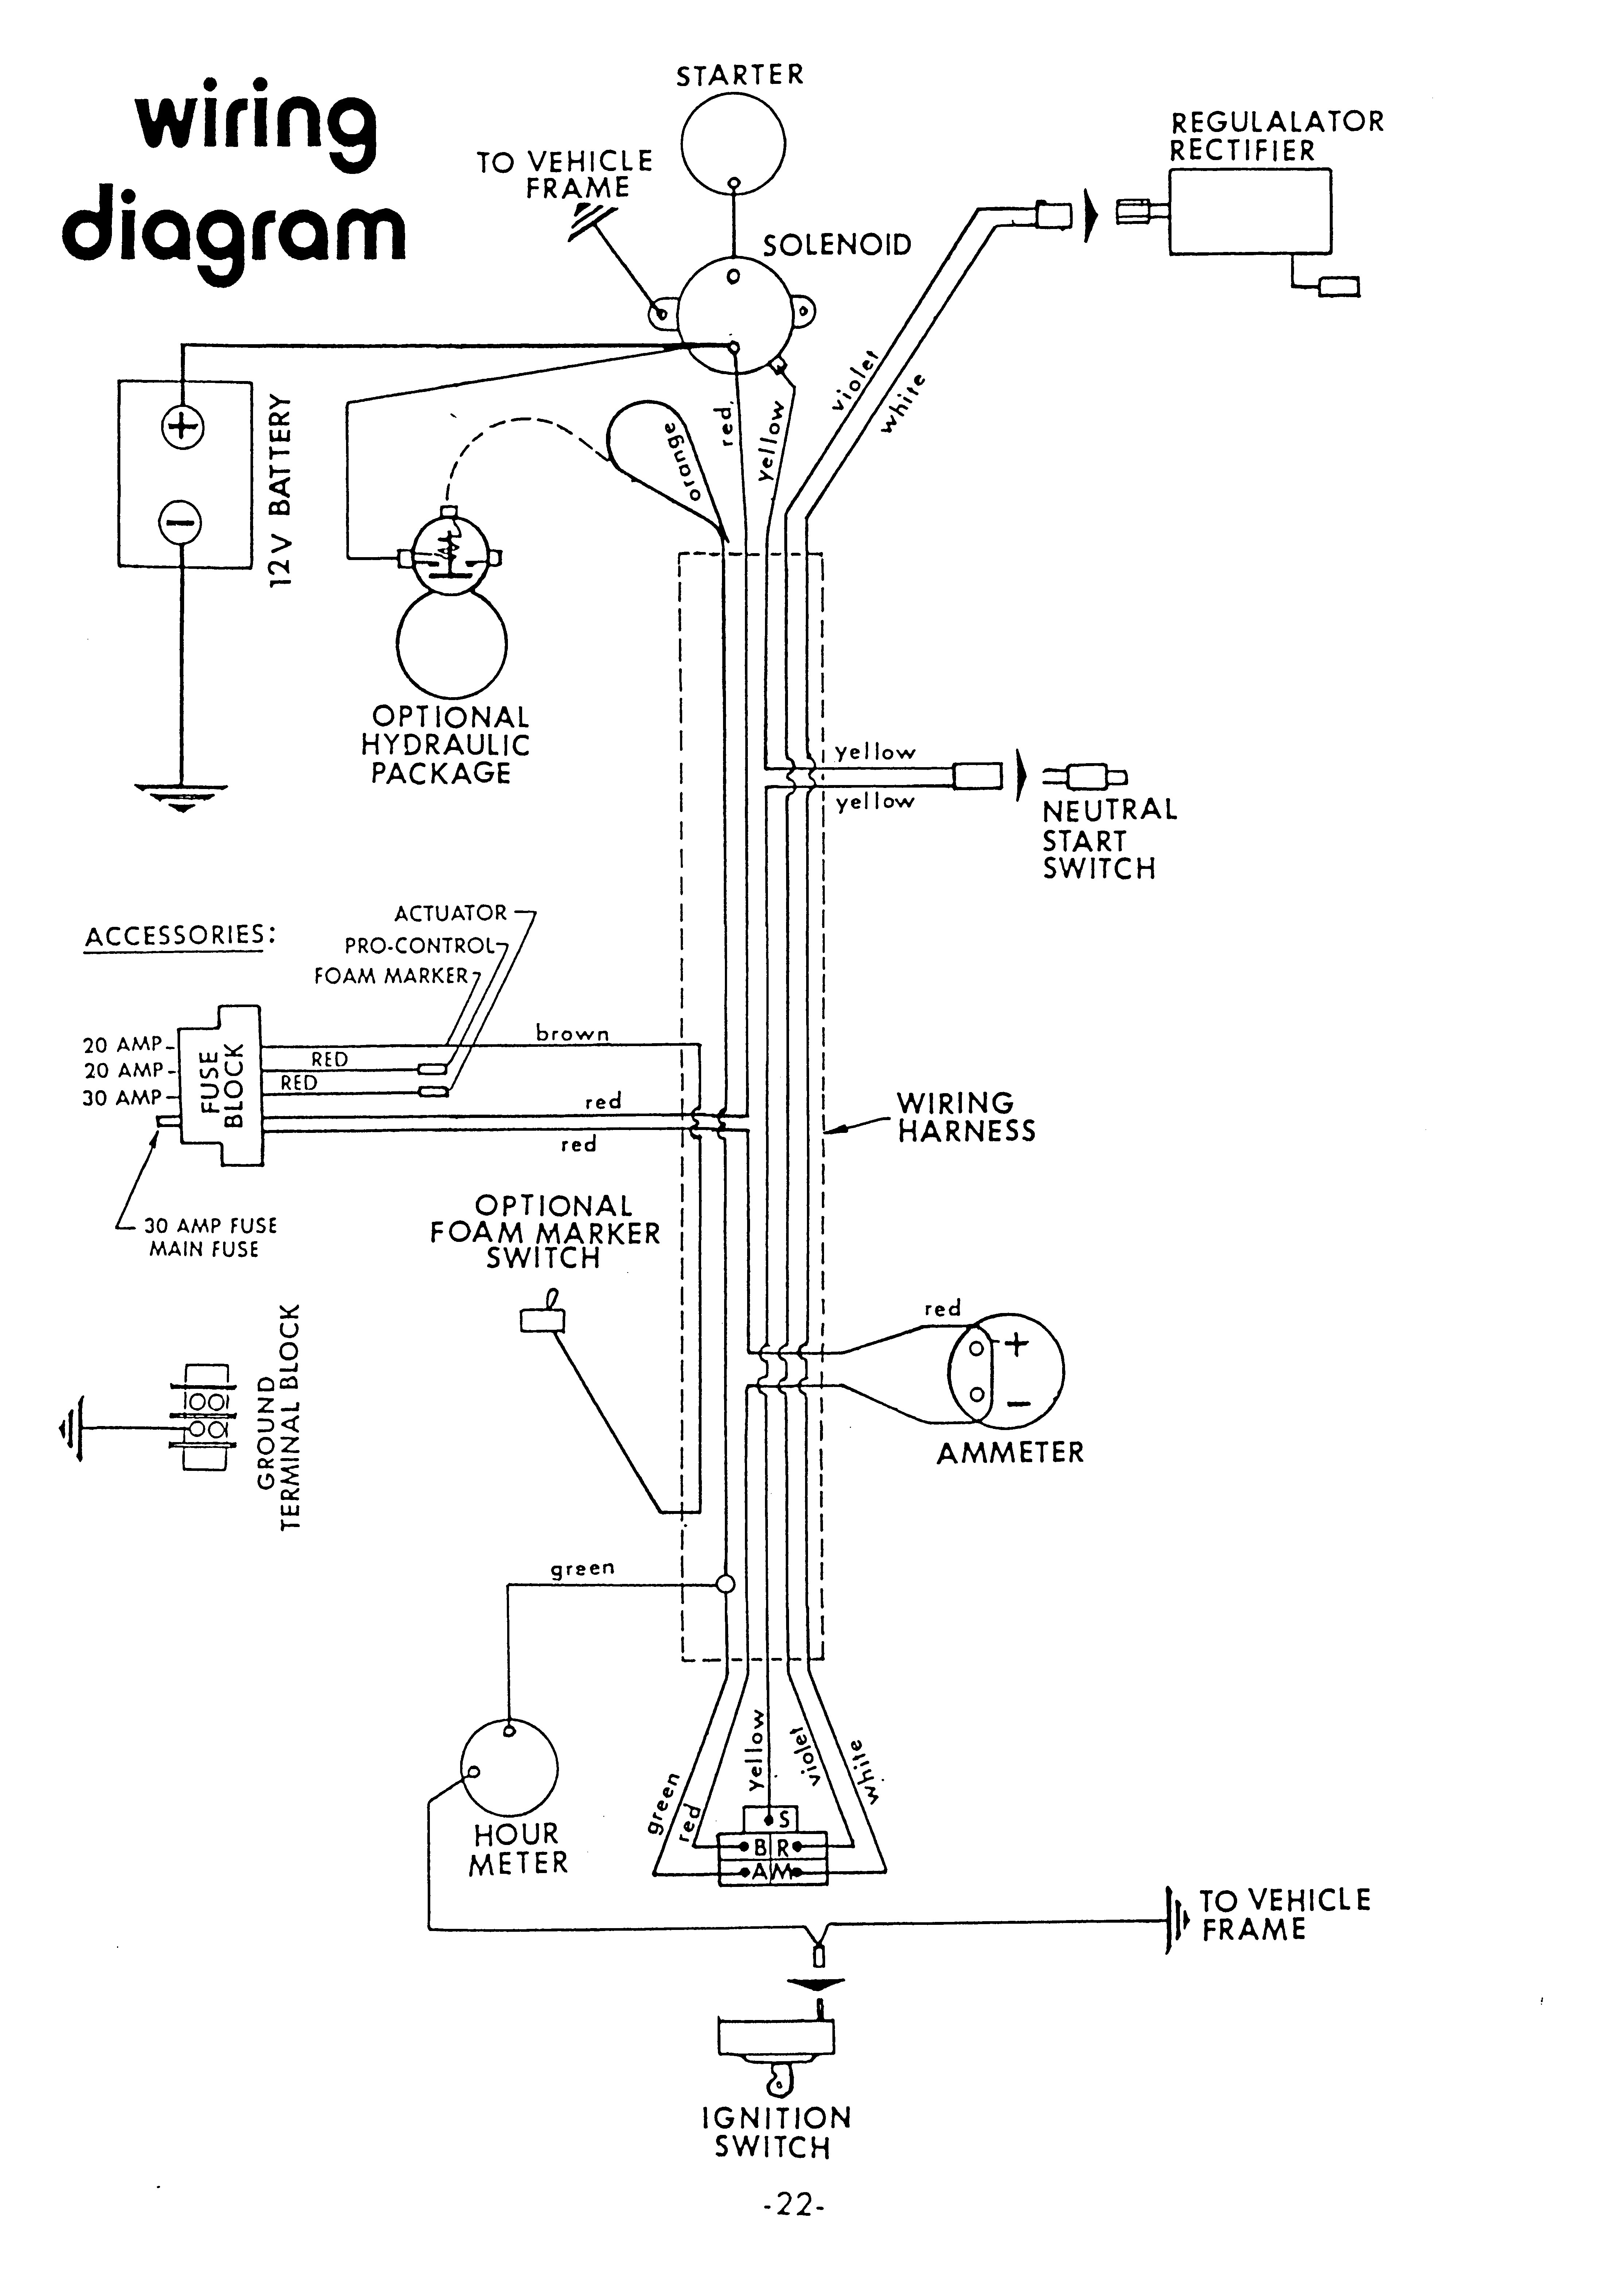 Kohler Engine Wiring Diagram Fresh Cool Ignition Coil Symbol Kohler Ignition Switch Wiring Diagram Collection